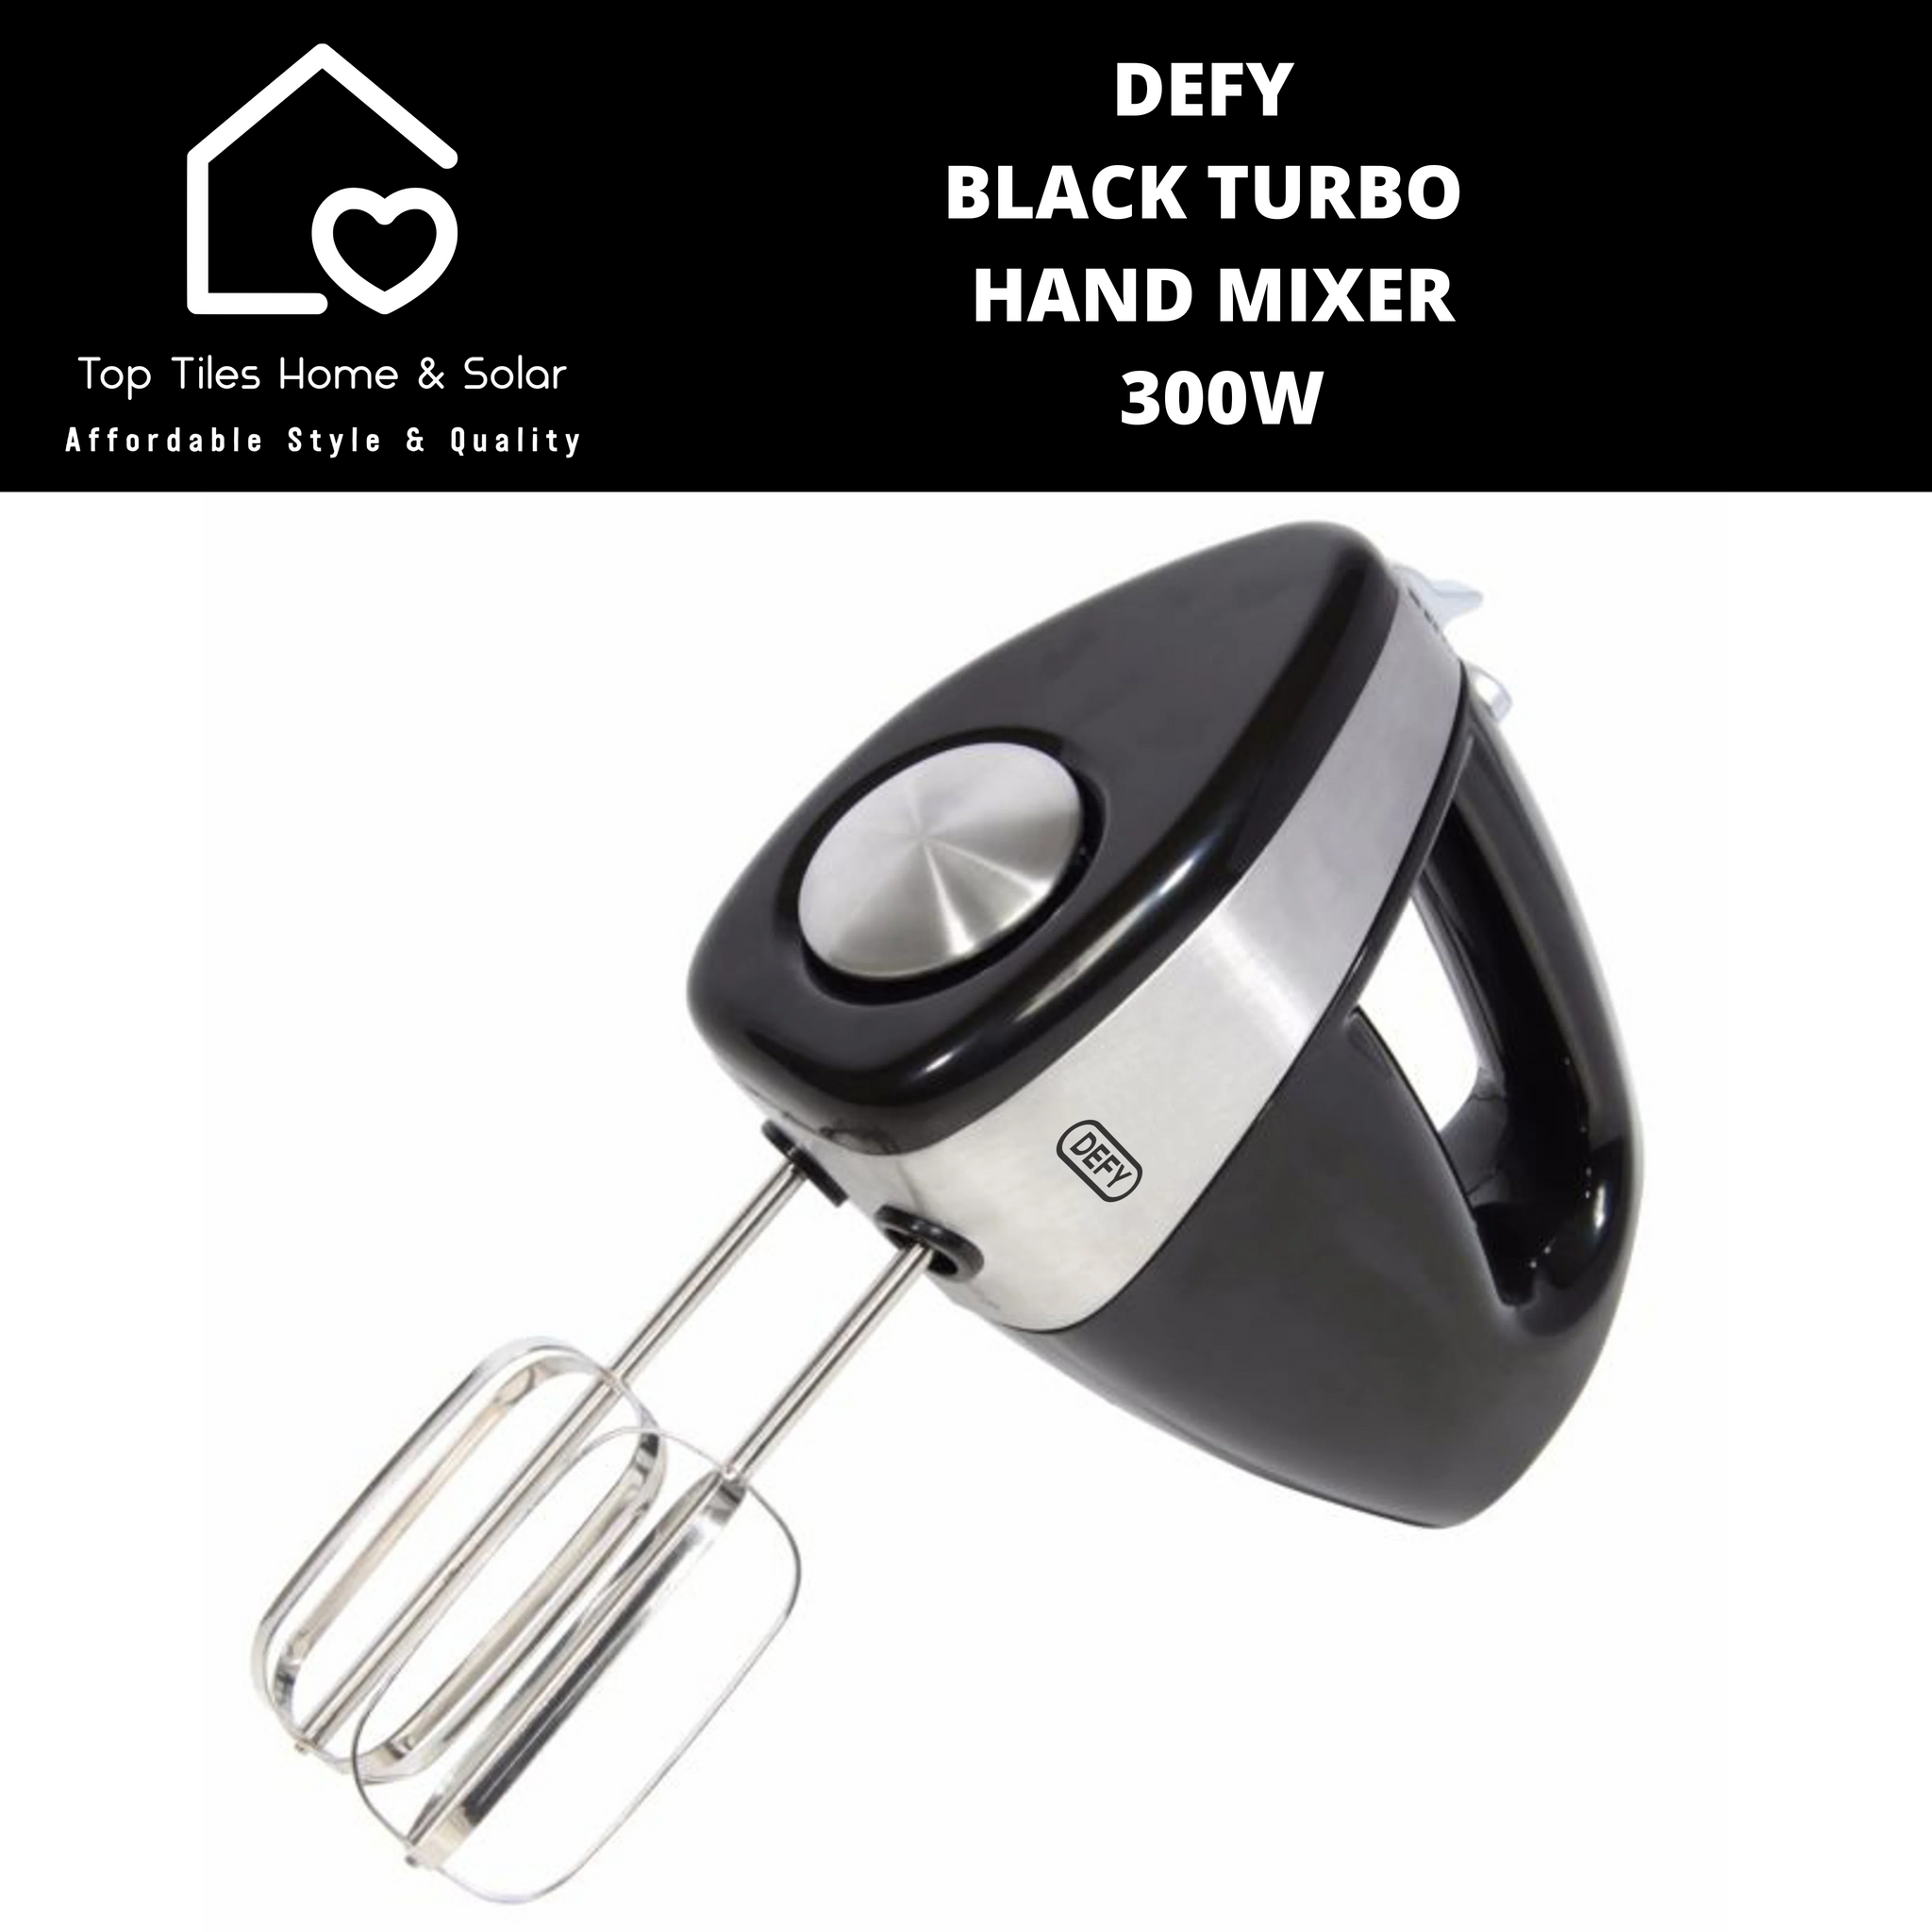 Defy Black Turbo Hand Mixer – 300W Tiles HM5040B & Top - Solar Home